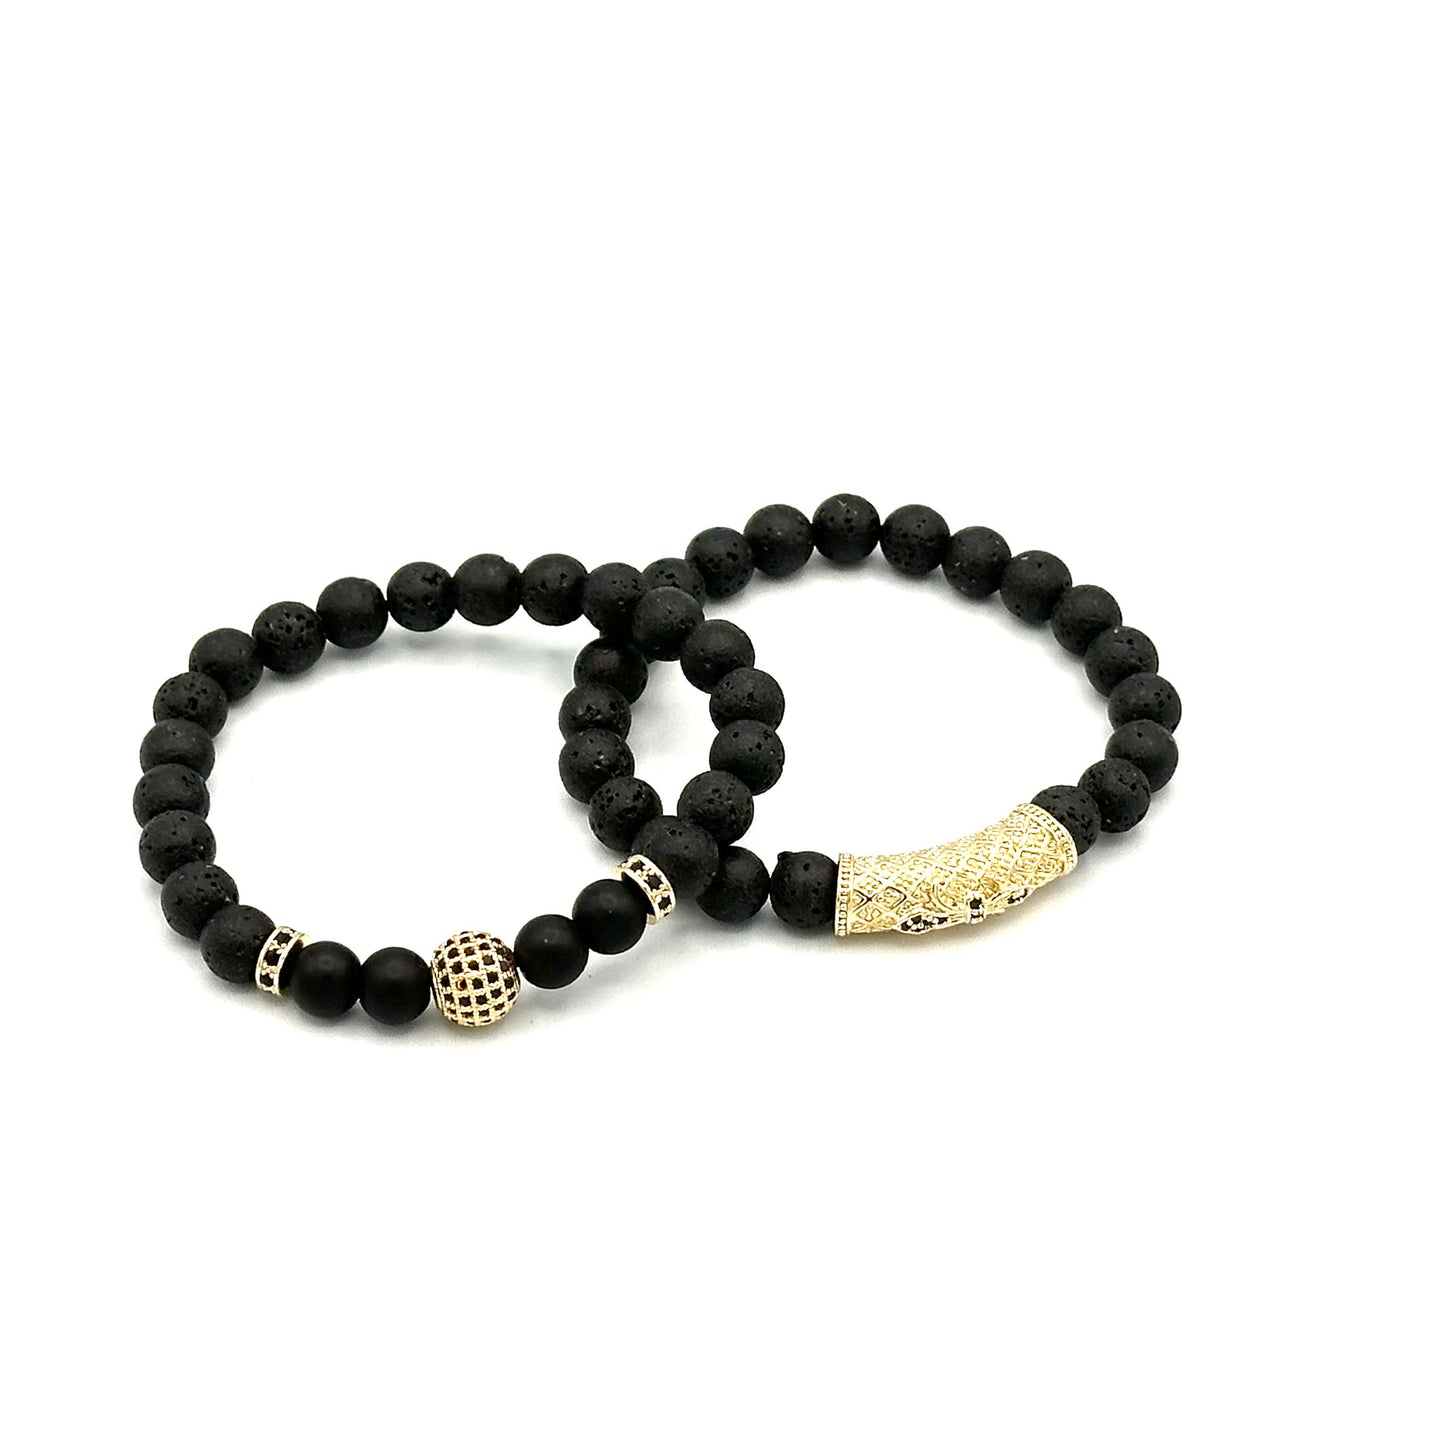 Spiritual Harmony beaded bracelet - 2pc Bead Bracelet Sets